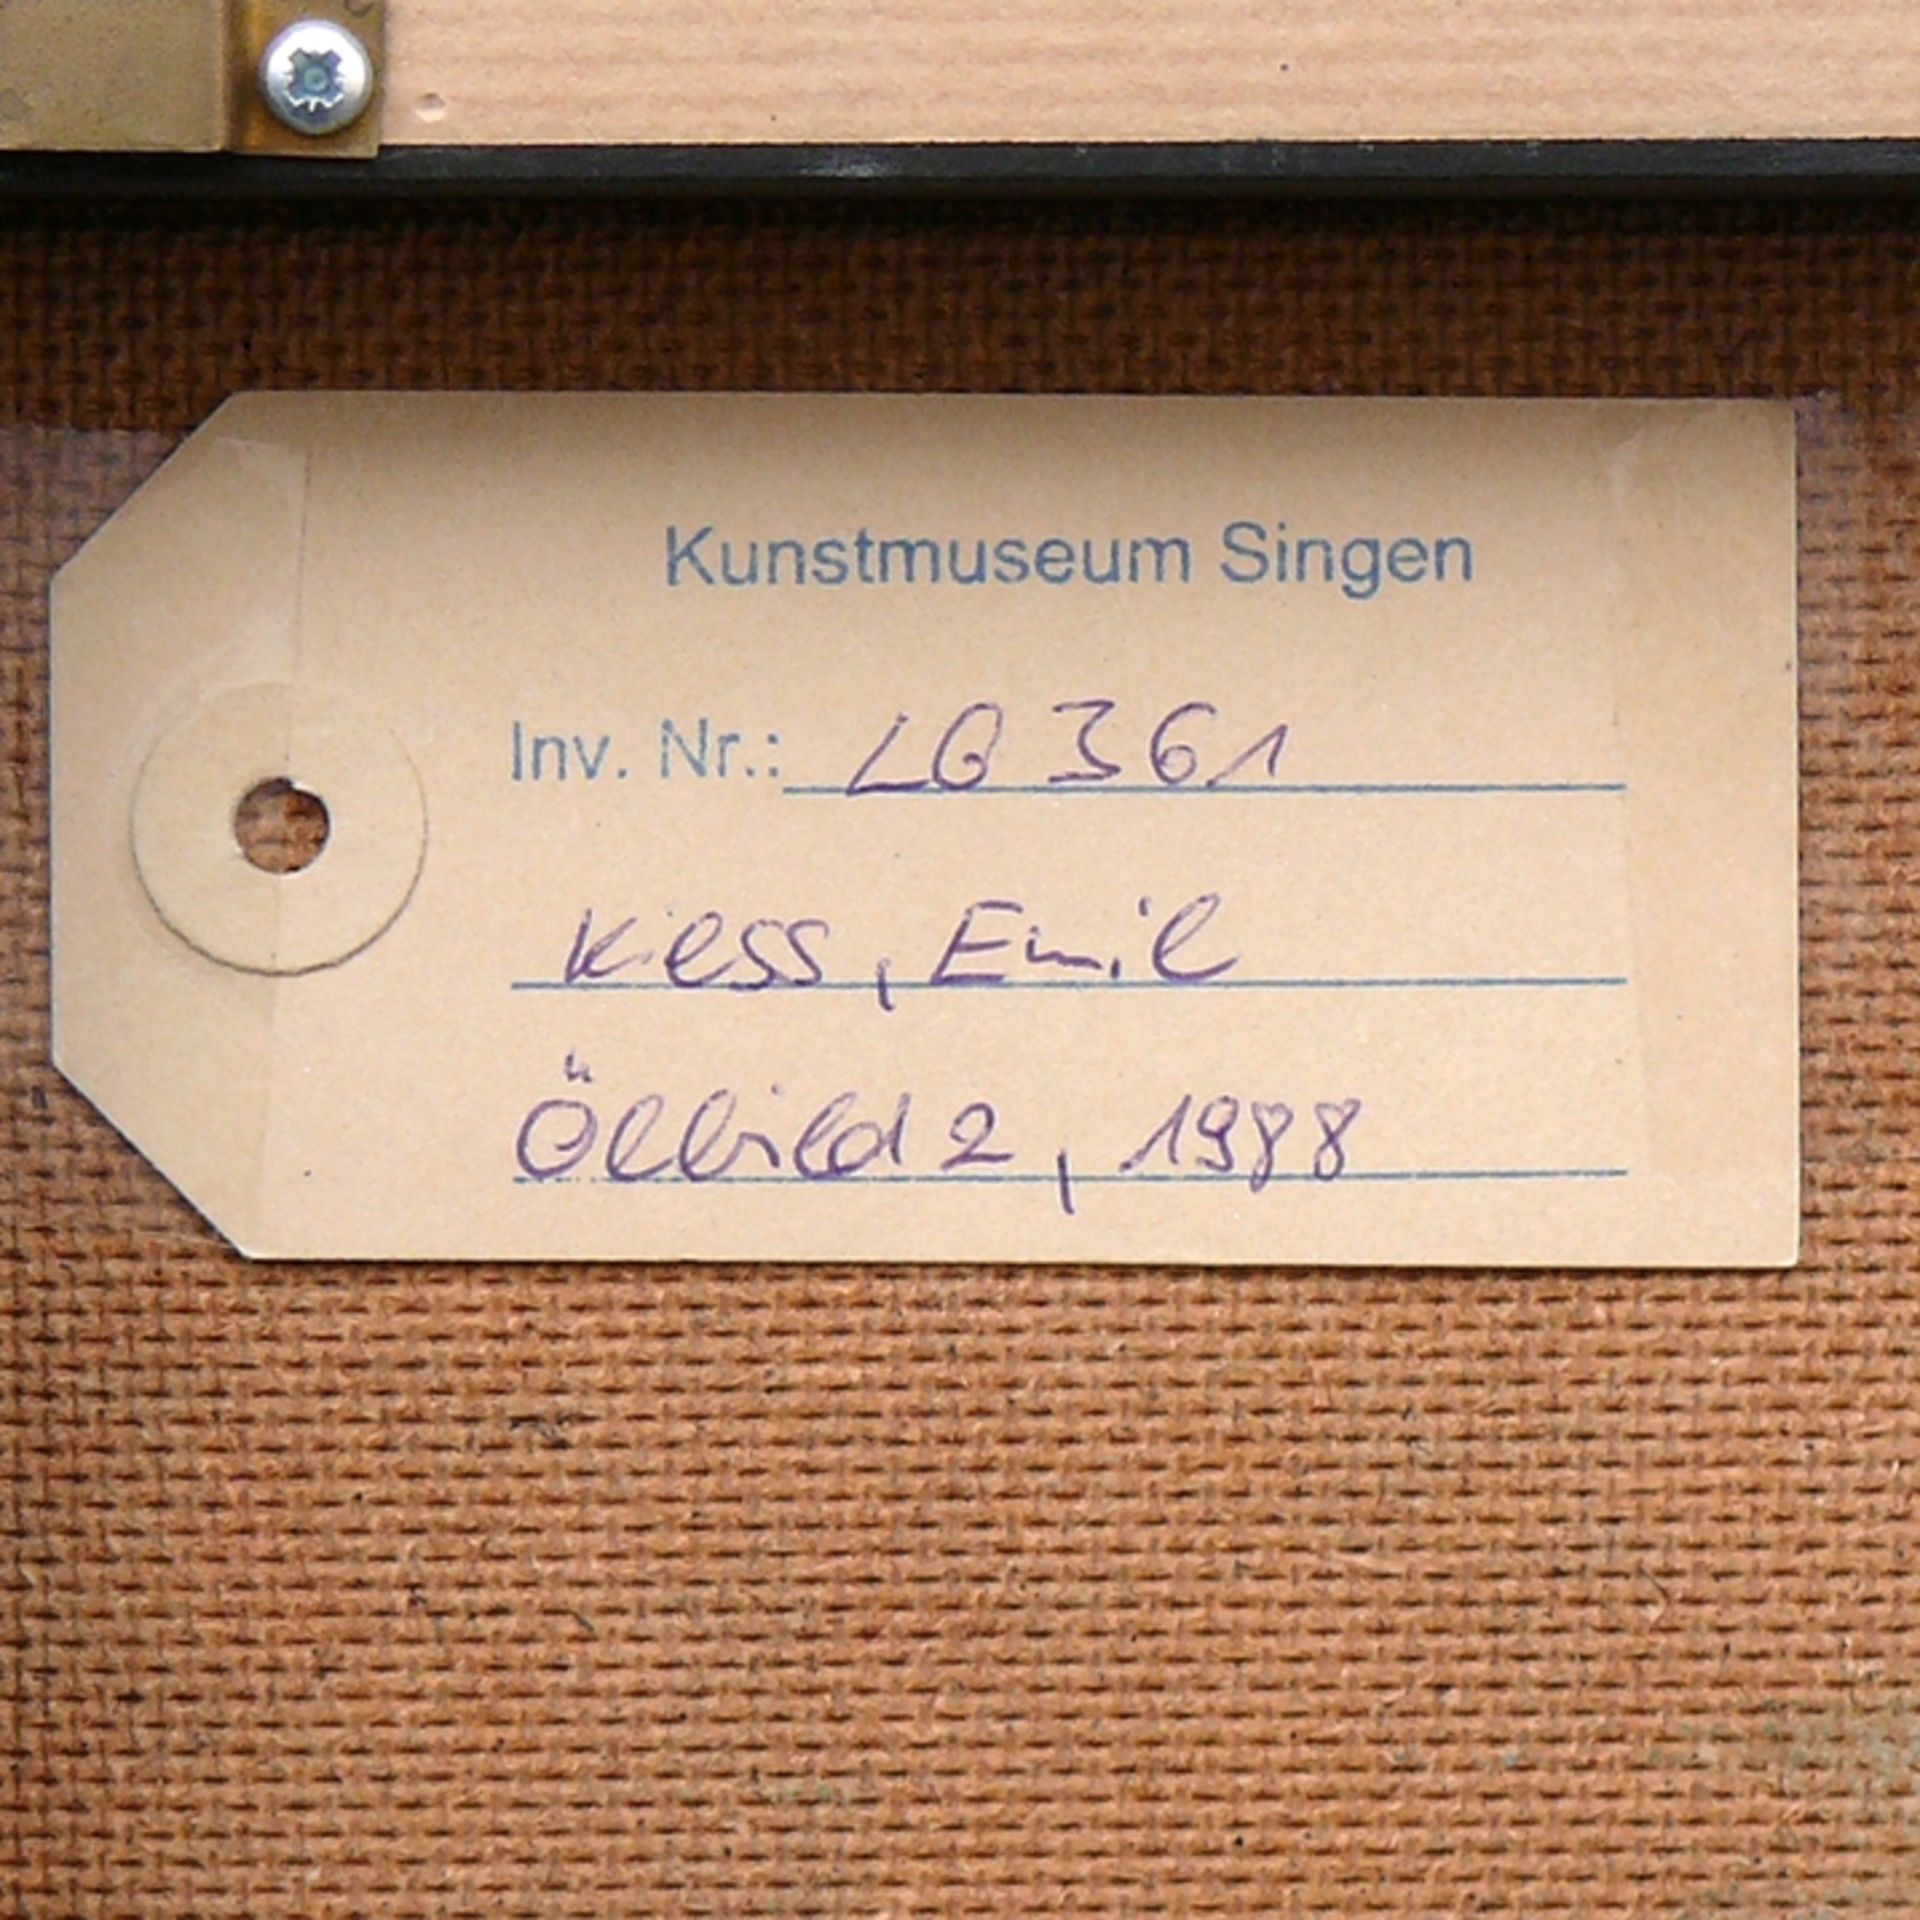 Kiess, Emil (geb. Trossingen 1930) - Bild 5 aus 5